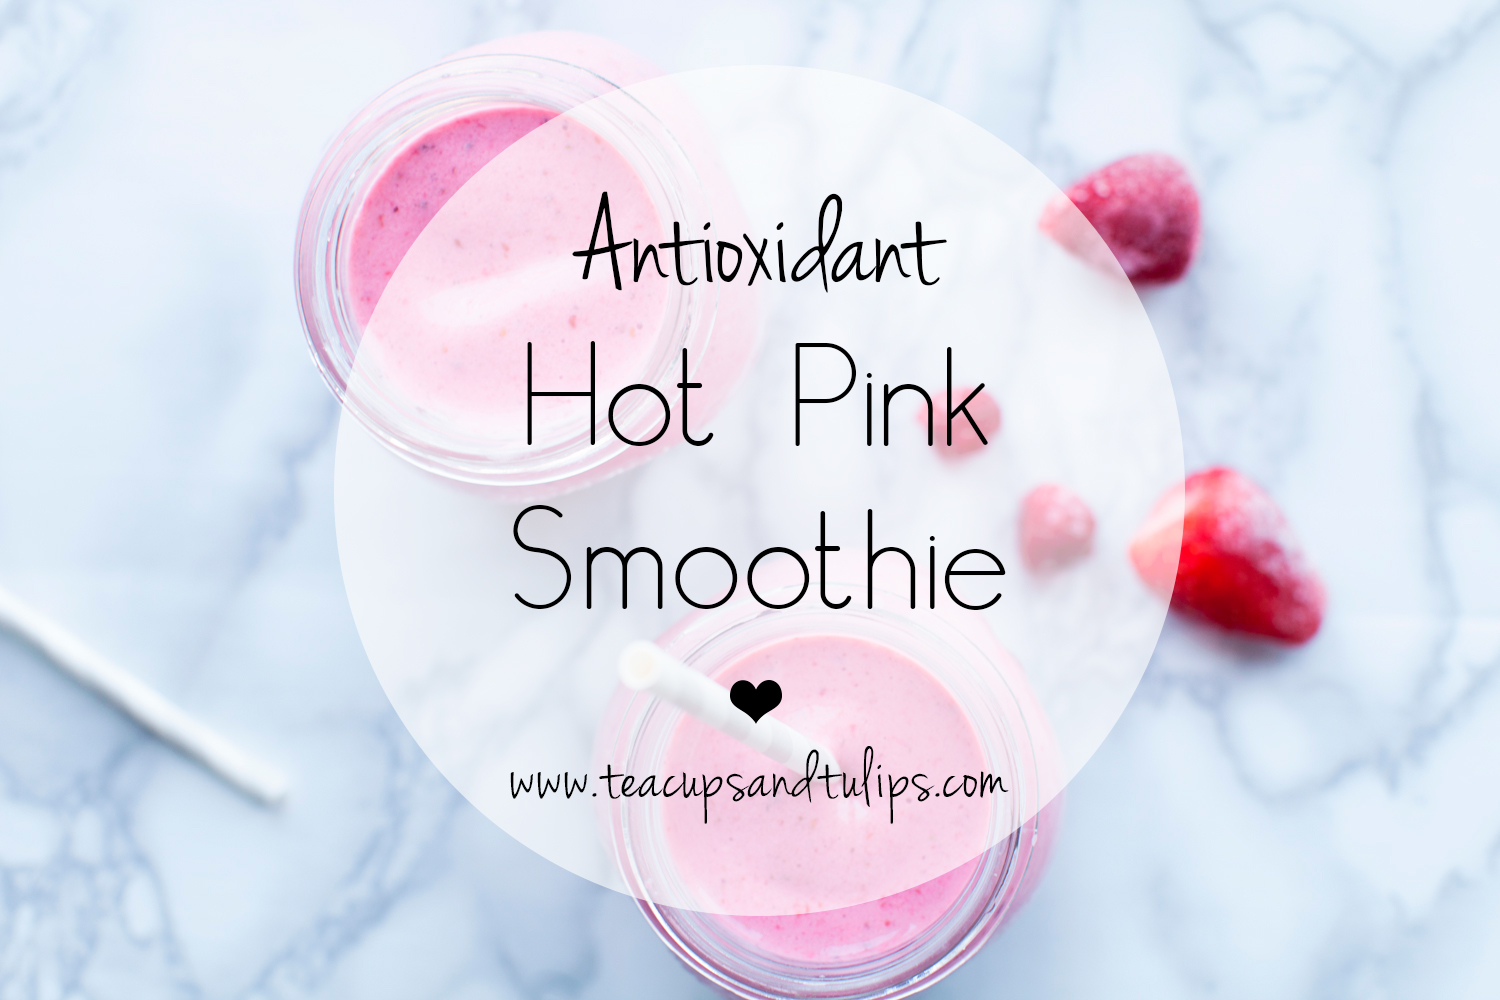 Antioxidant hot pink chia smoothie recipe